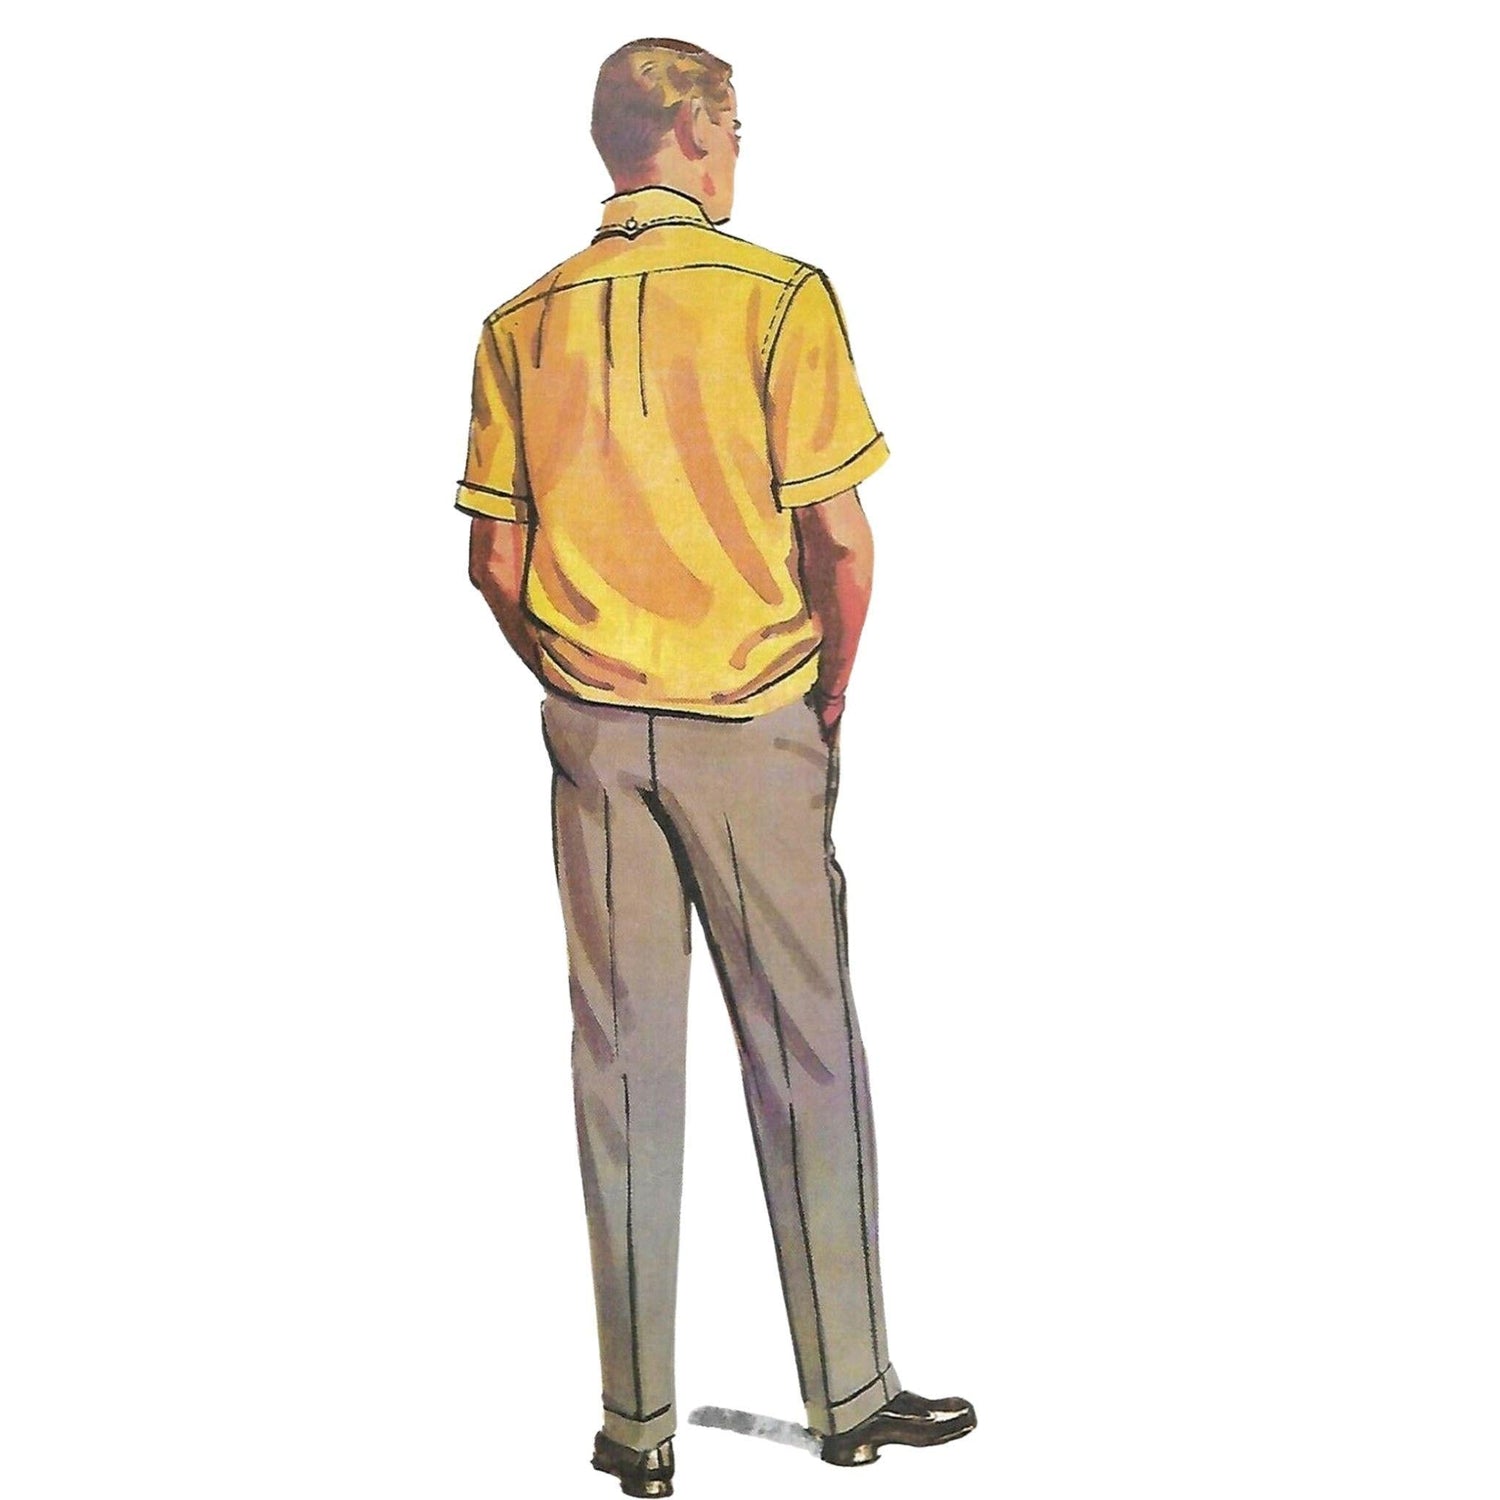 1950s Pattern, Men's Slacks, Pants, Trousers & Shirt - Chest 38” (96.5 –  Vintage Sewing Pattern Company